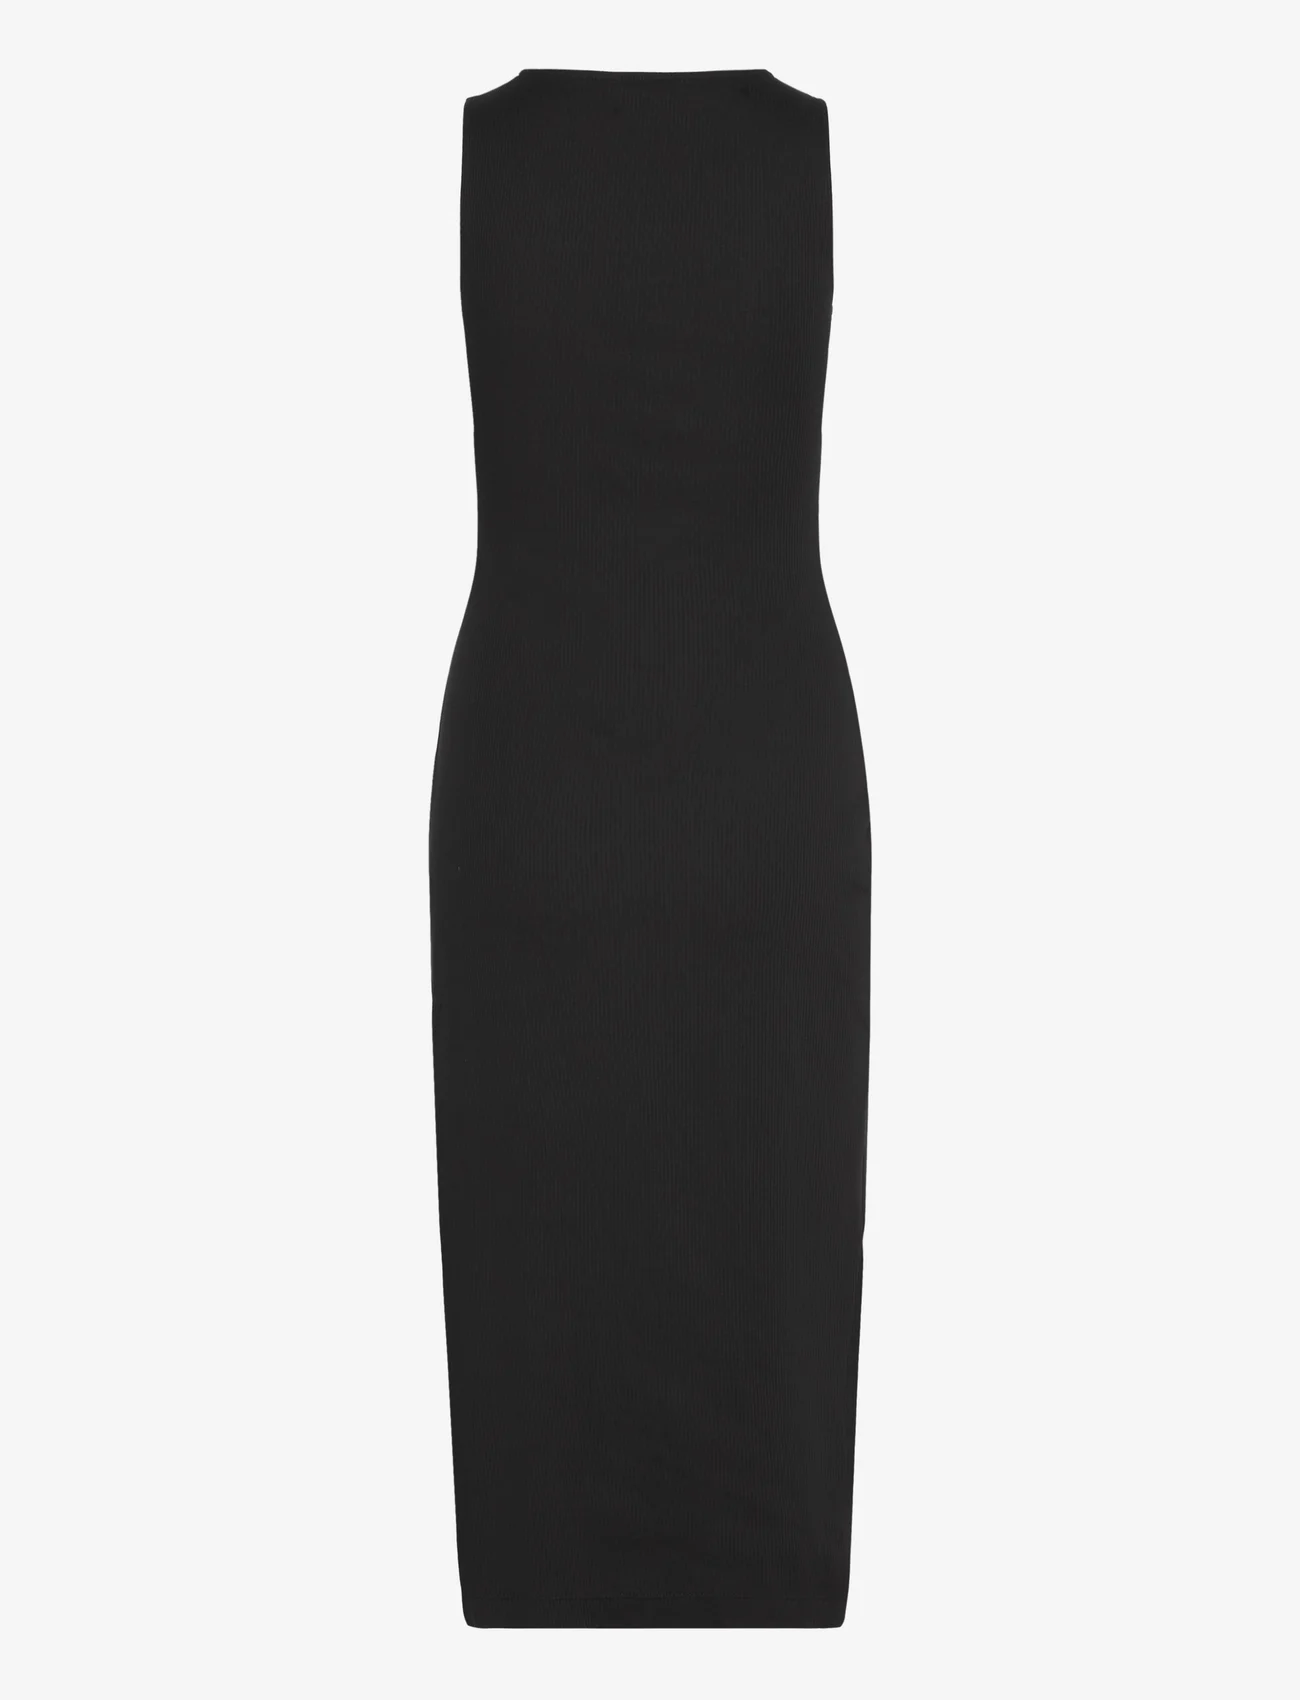 Calvin Klein Jeans - SEAMING LONG RIB DRESS - bodycon dresses - ck black - 1